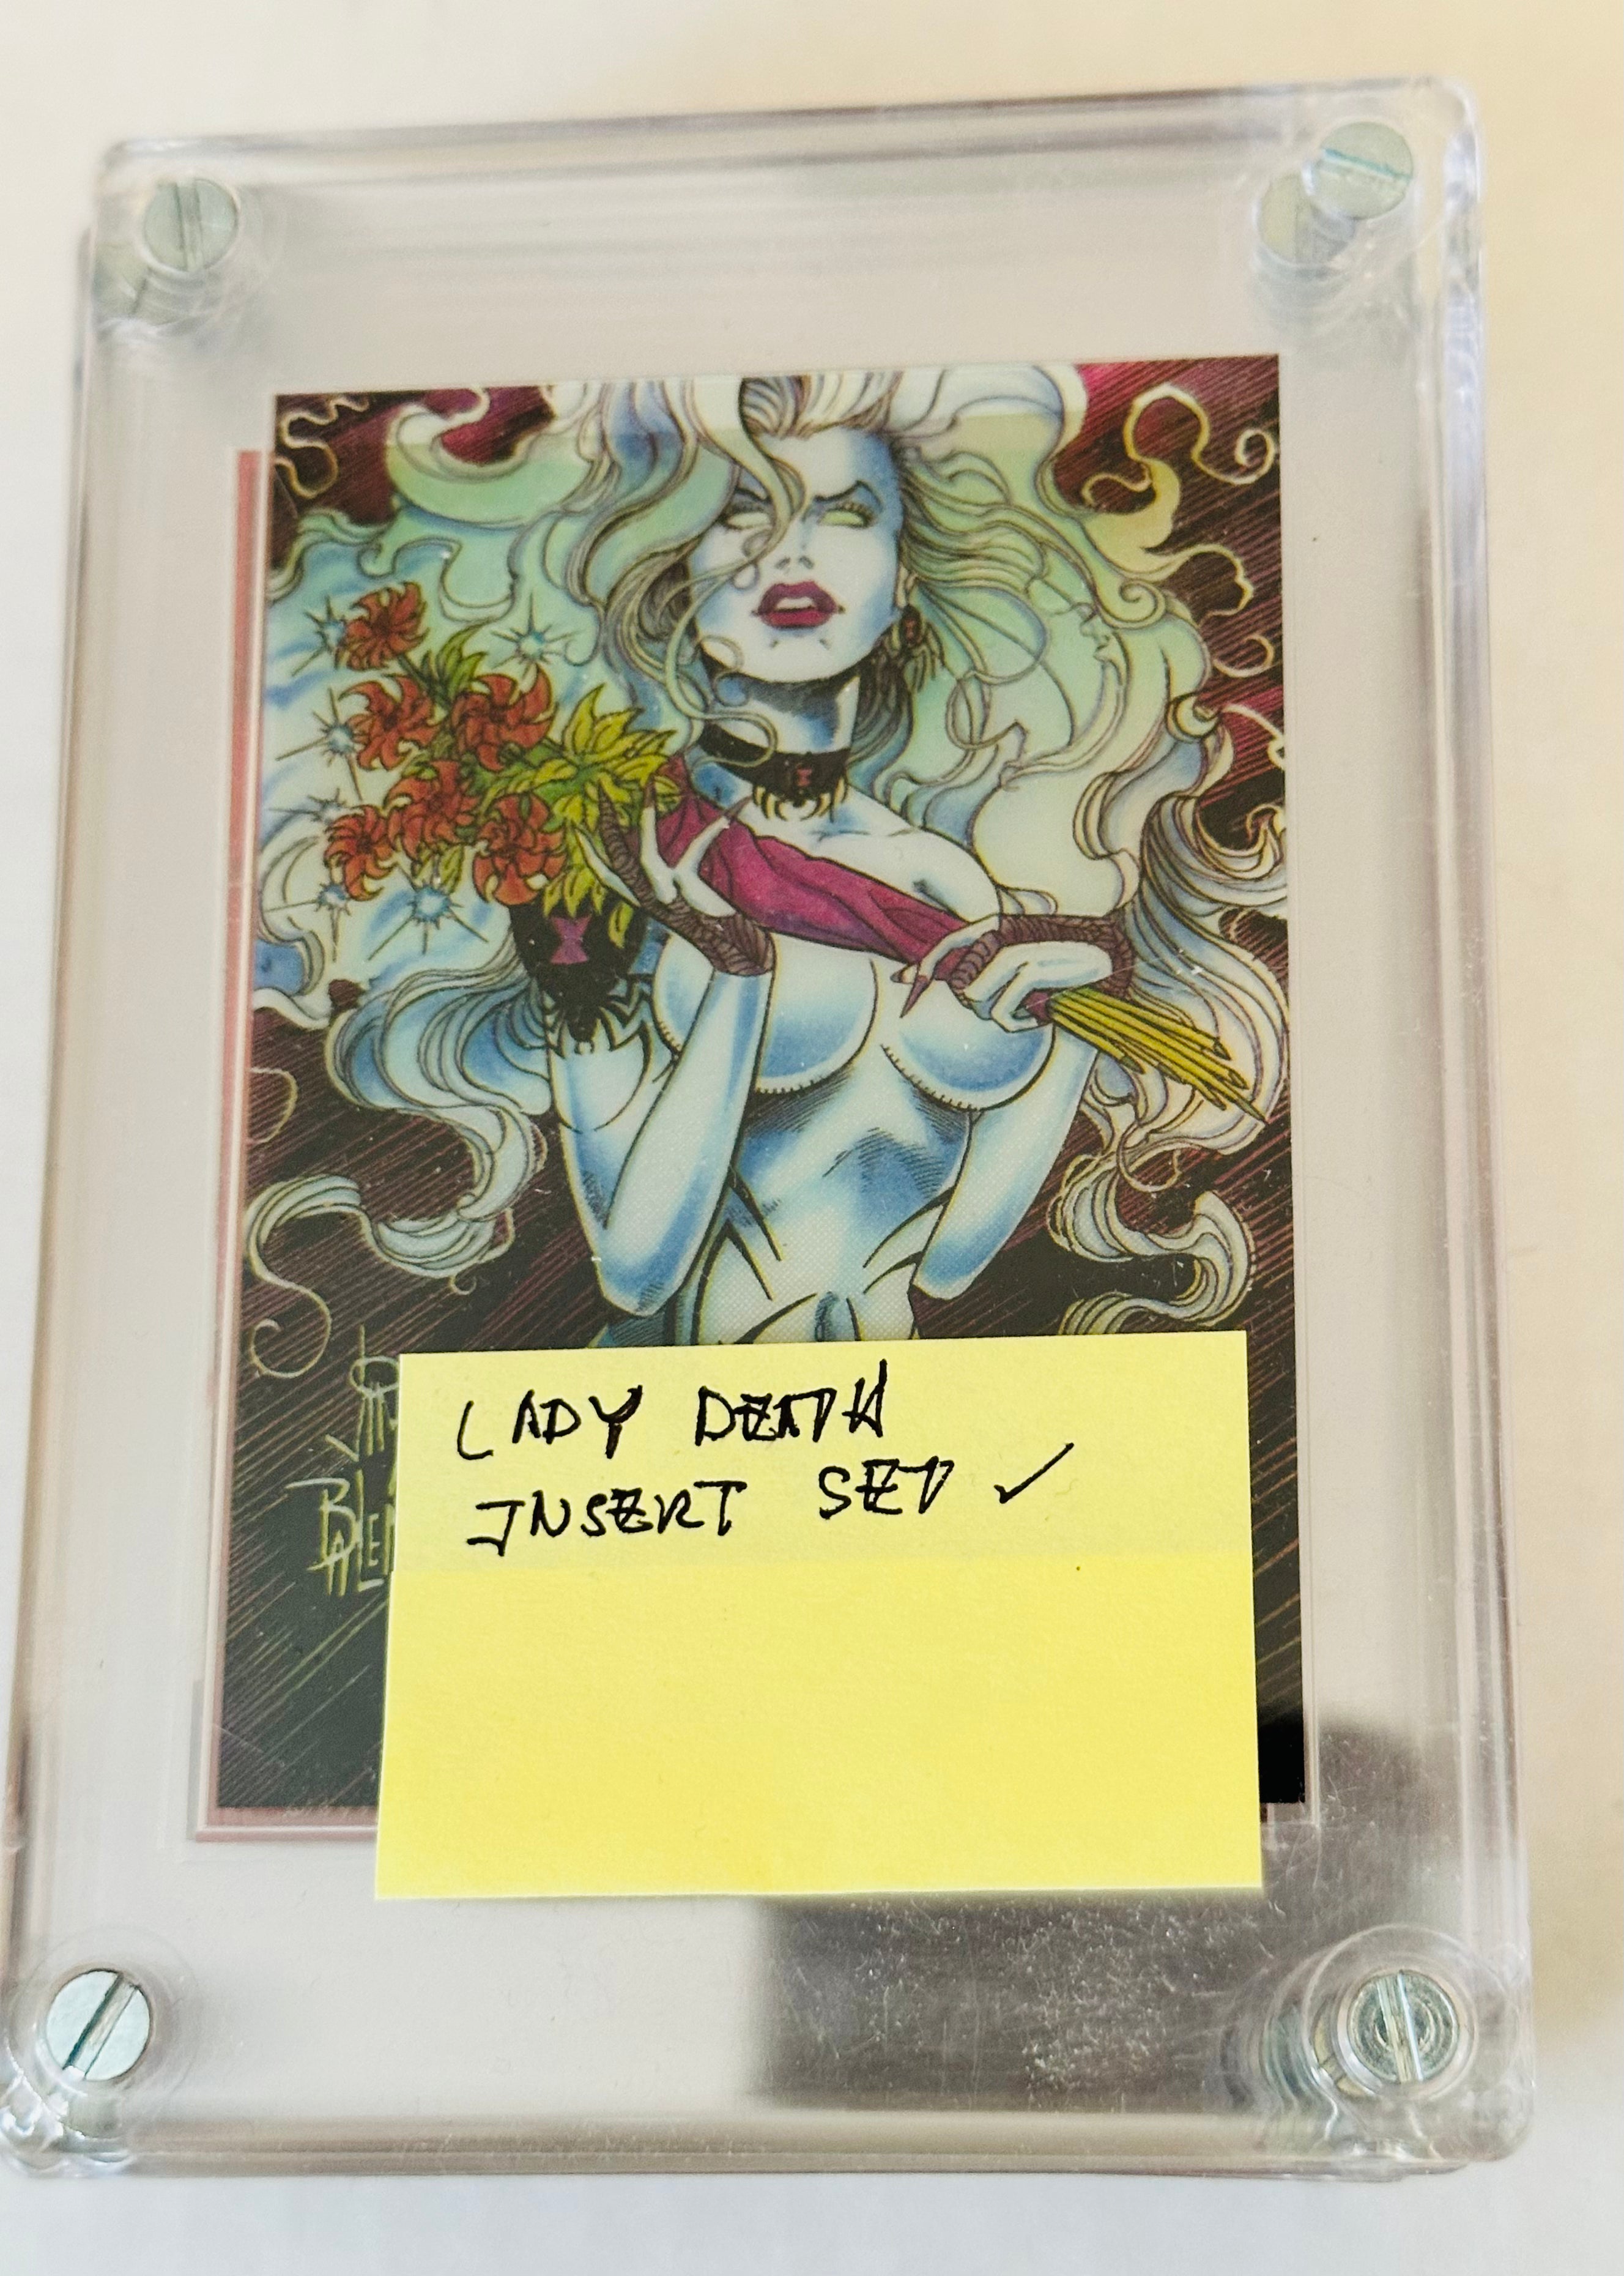 Lady Death rare Translucent insert cards set 1990s